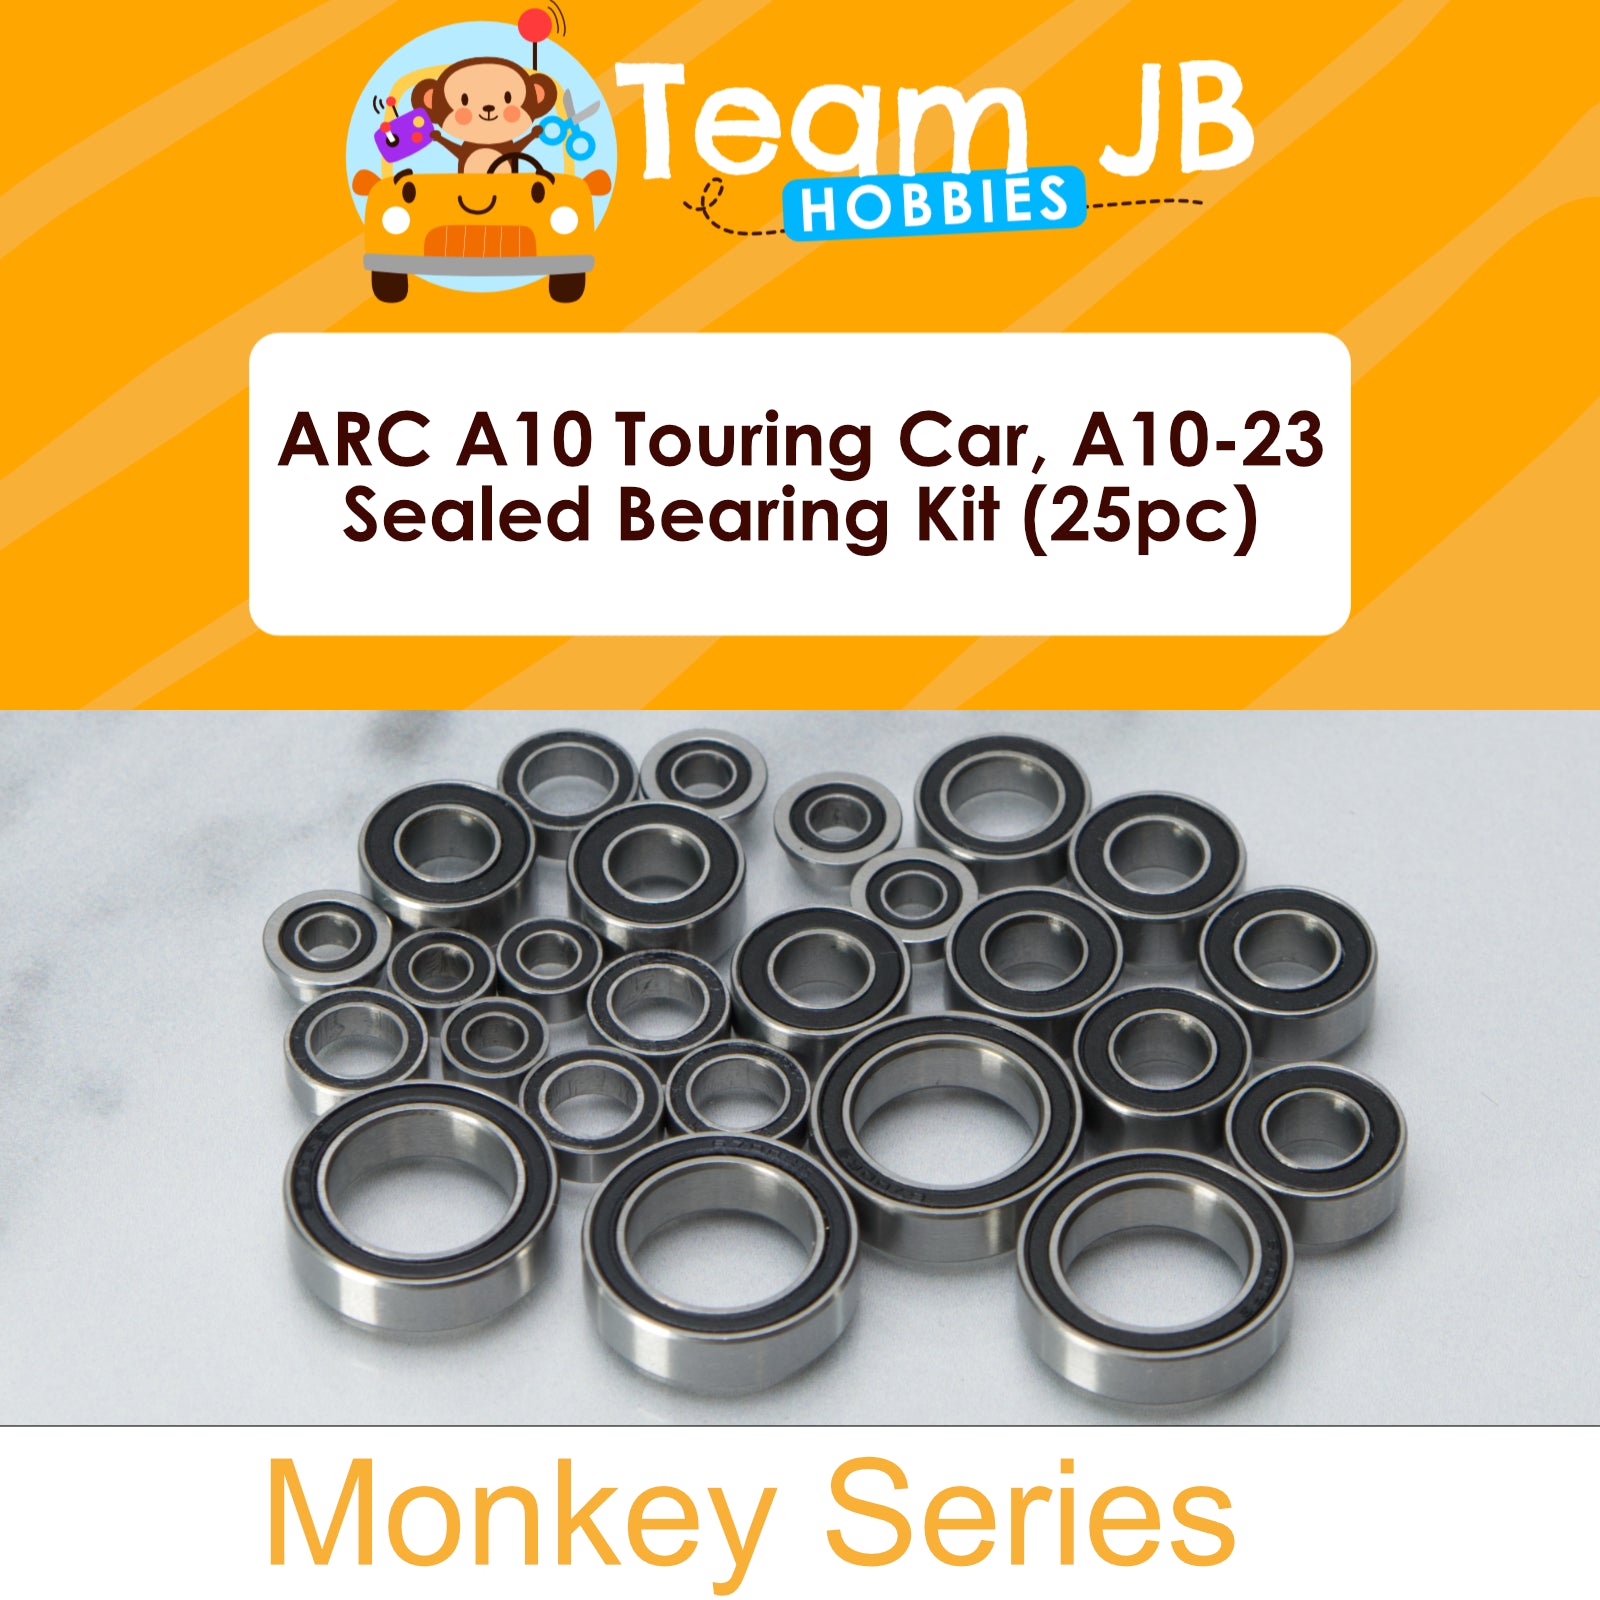 ARC A10 Touring Car, A10-23 - Sealed Bearing Kit